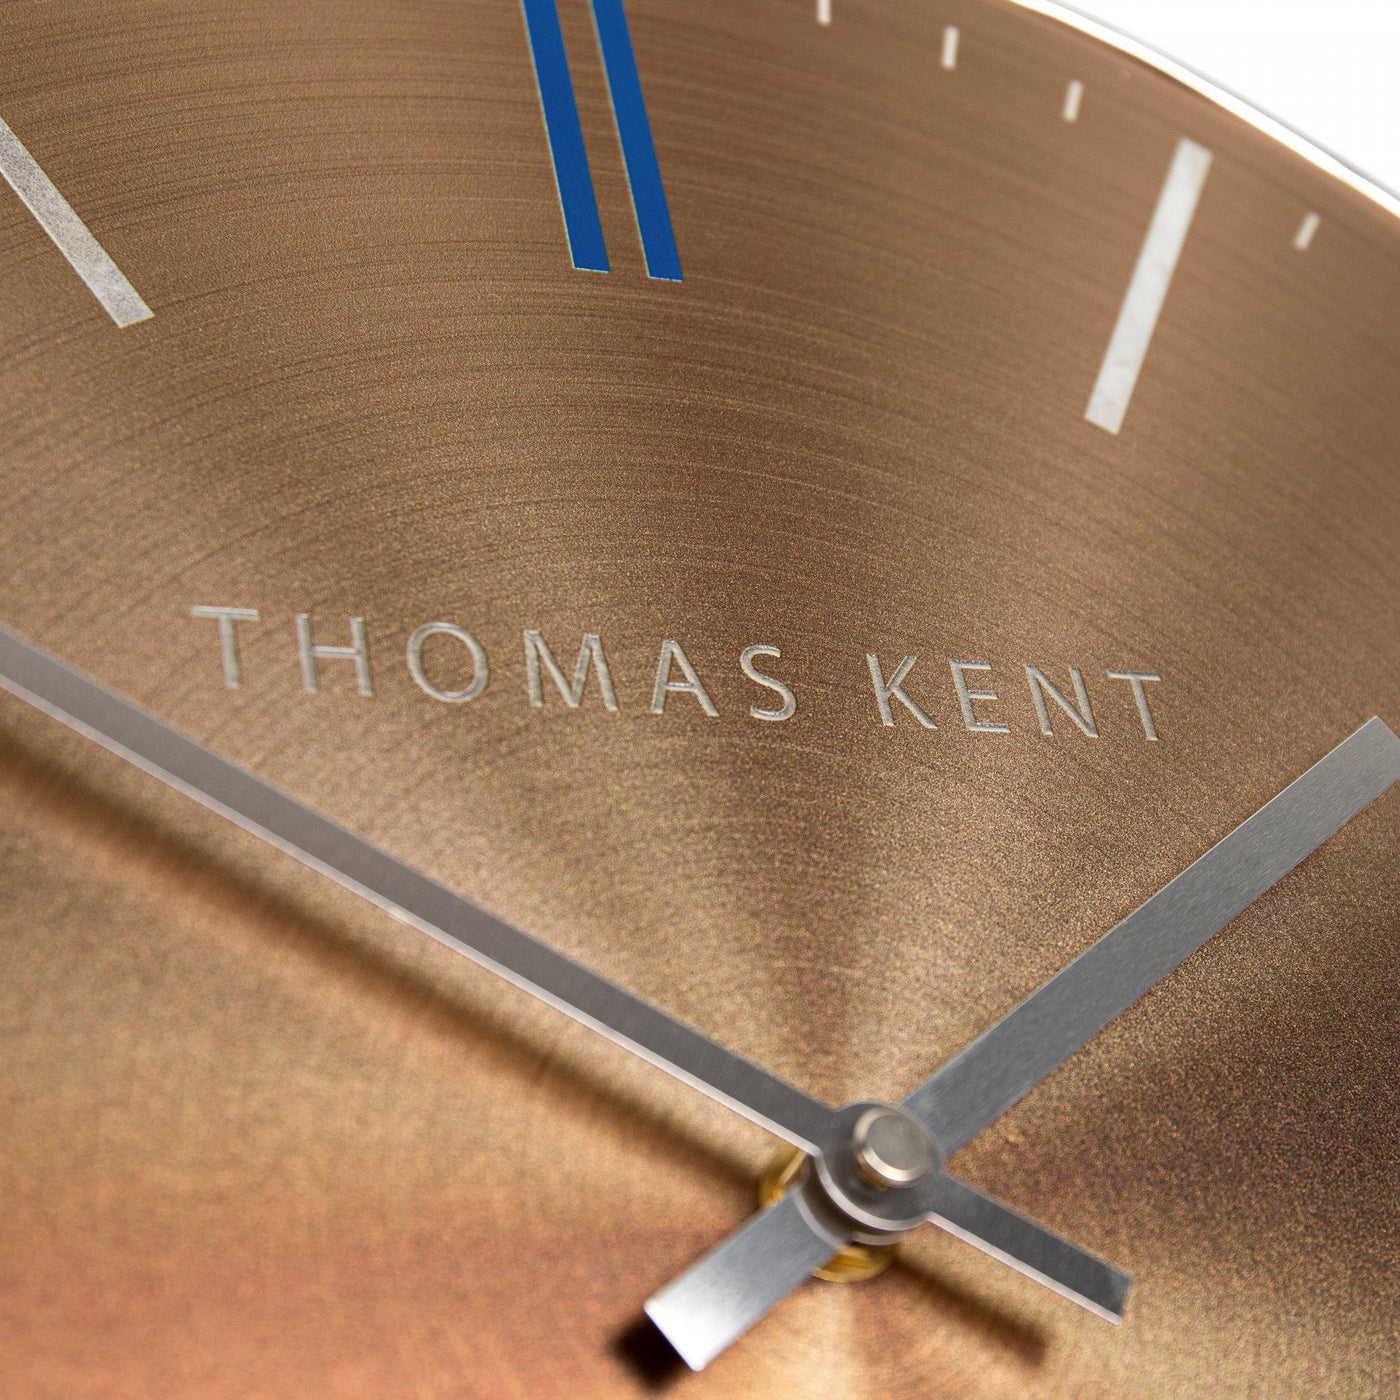 Thomas Kent London. Bistro Wall Clock 14" (36cm) Amber *NEW* - timeframedclocks